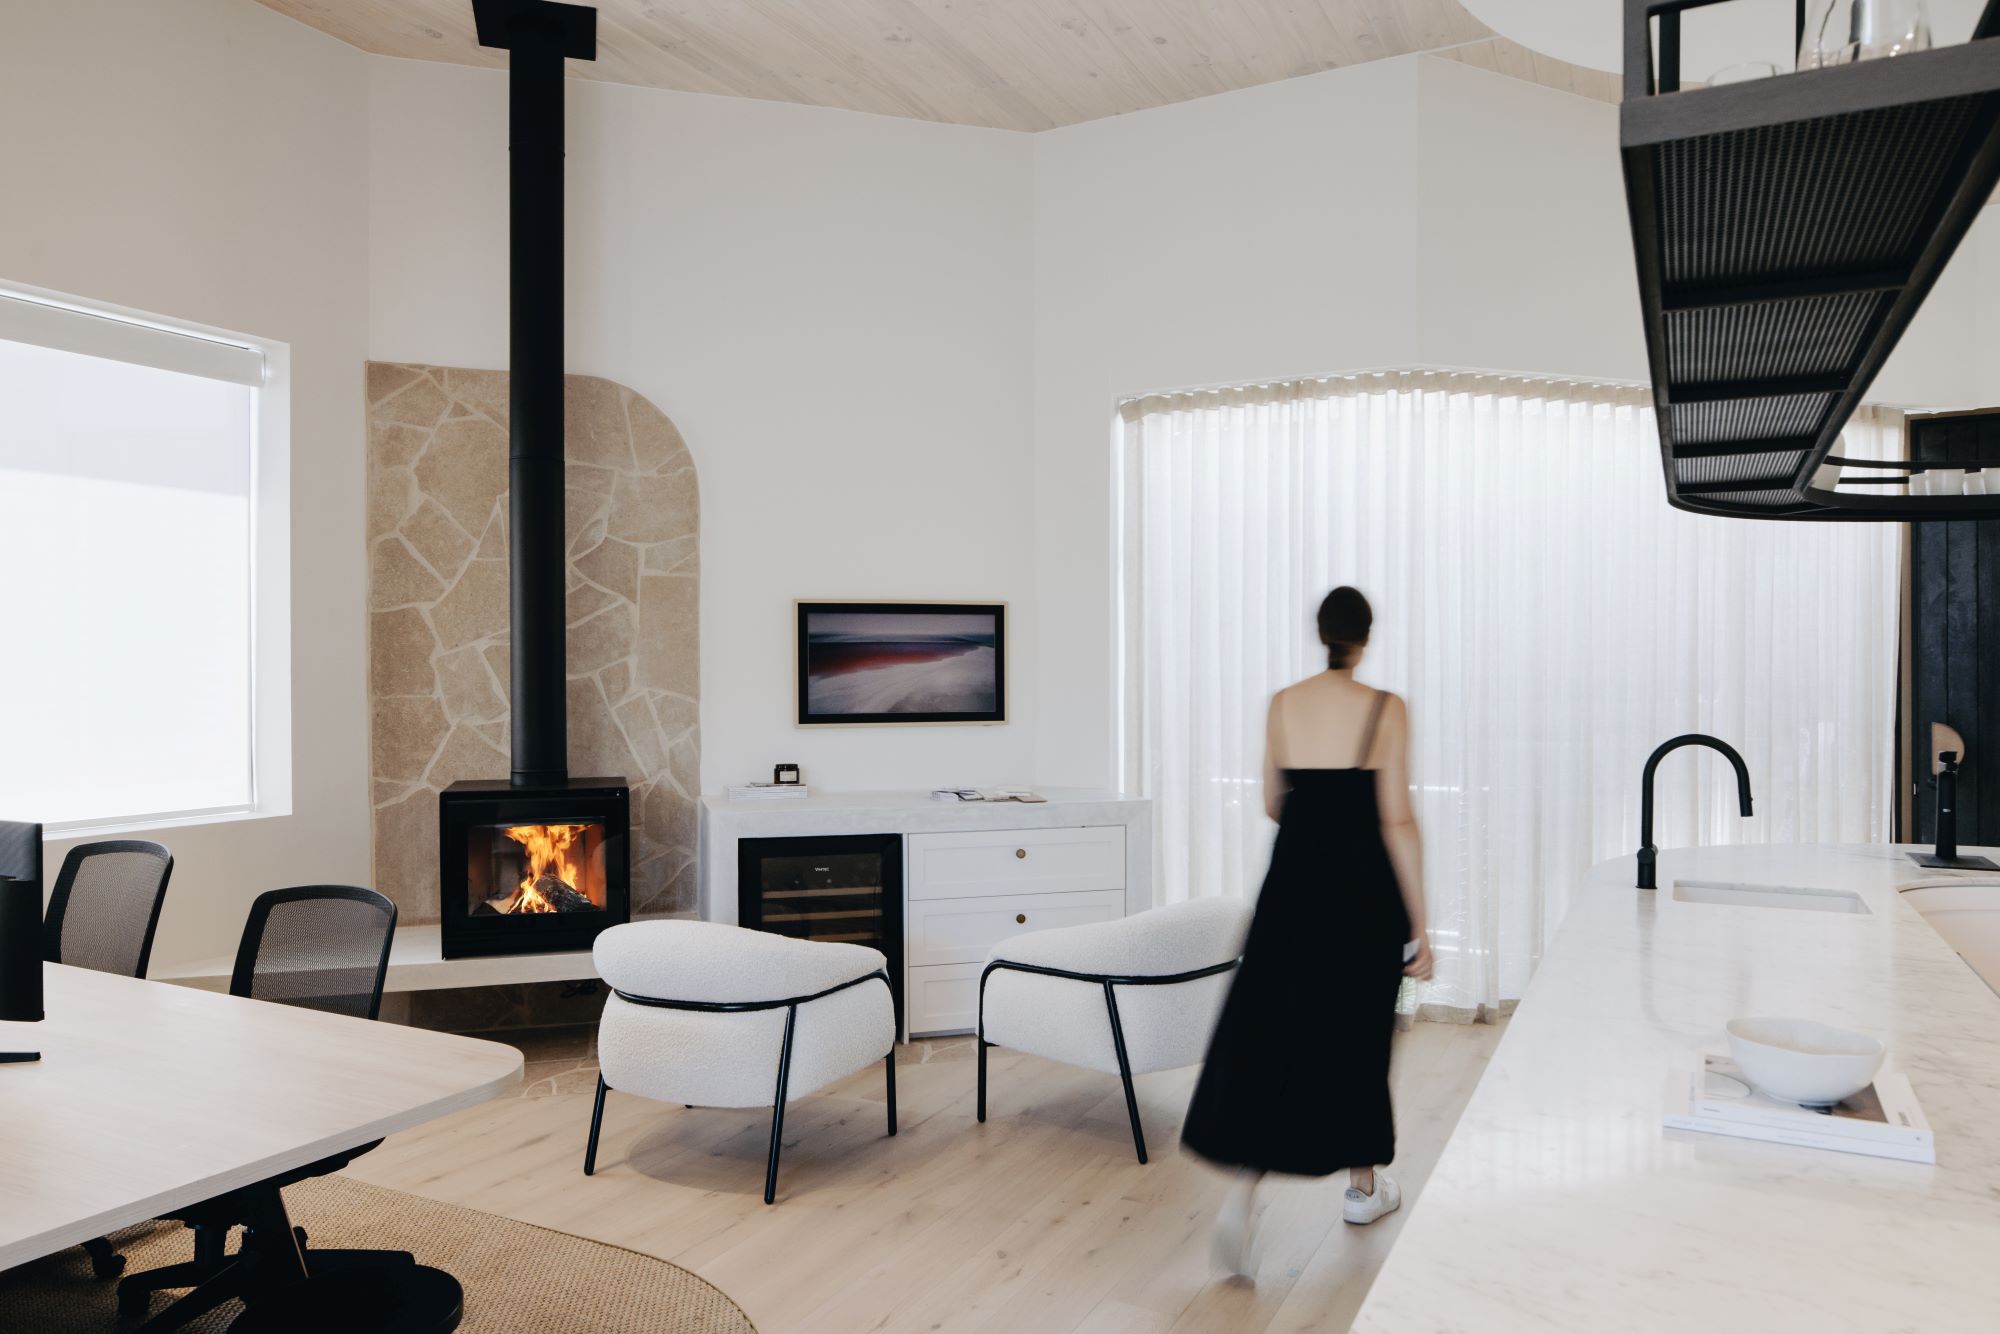 Escea's TFS650 Wood Fireplace transforms Bespoke Build & Design Studio